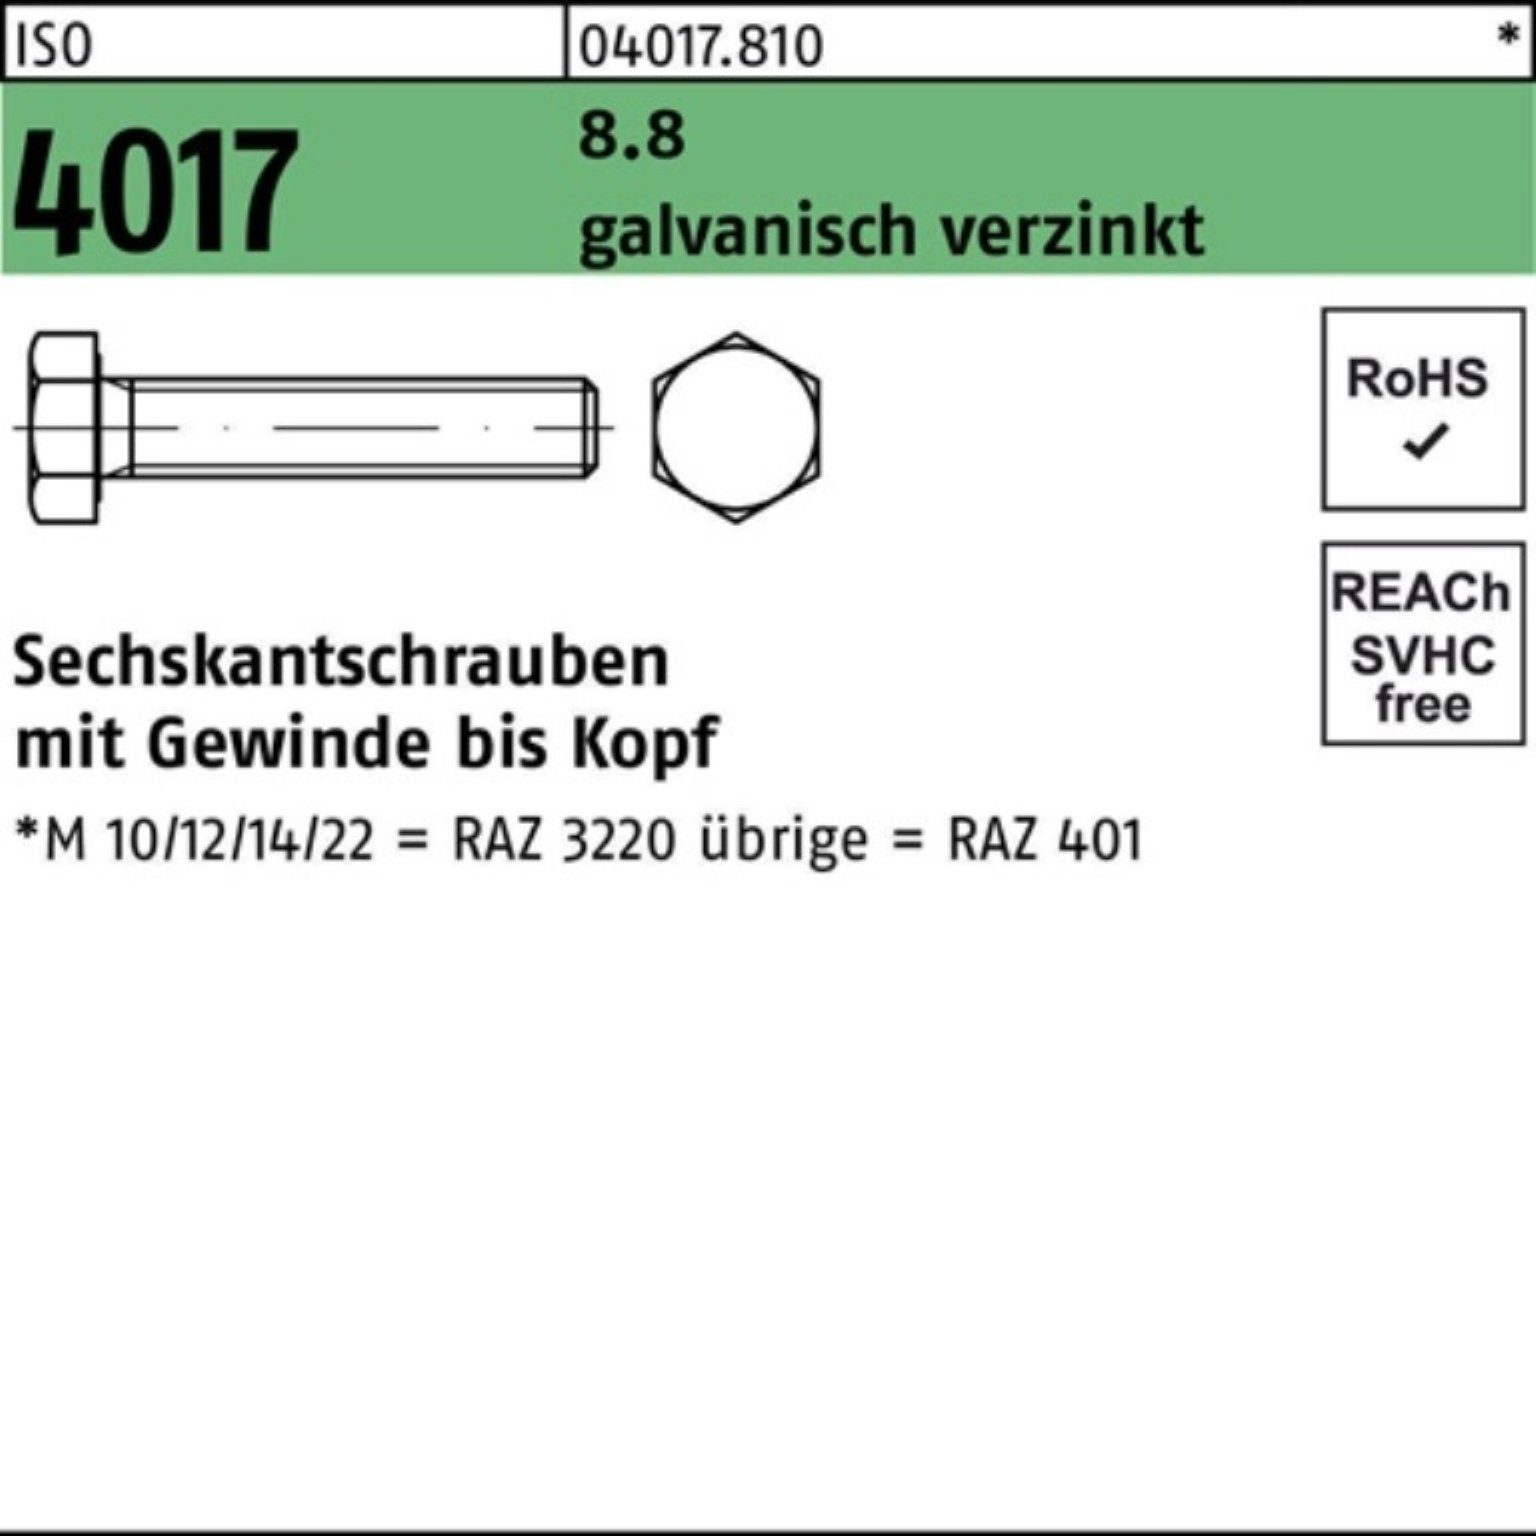 Bufab Sechskantschraube 500er Pack 500 VG 4017 ISO galv.verz. M3x Sechskantschraube 40 St 8.8